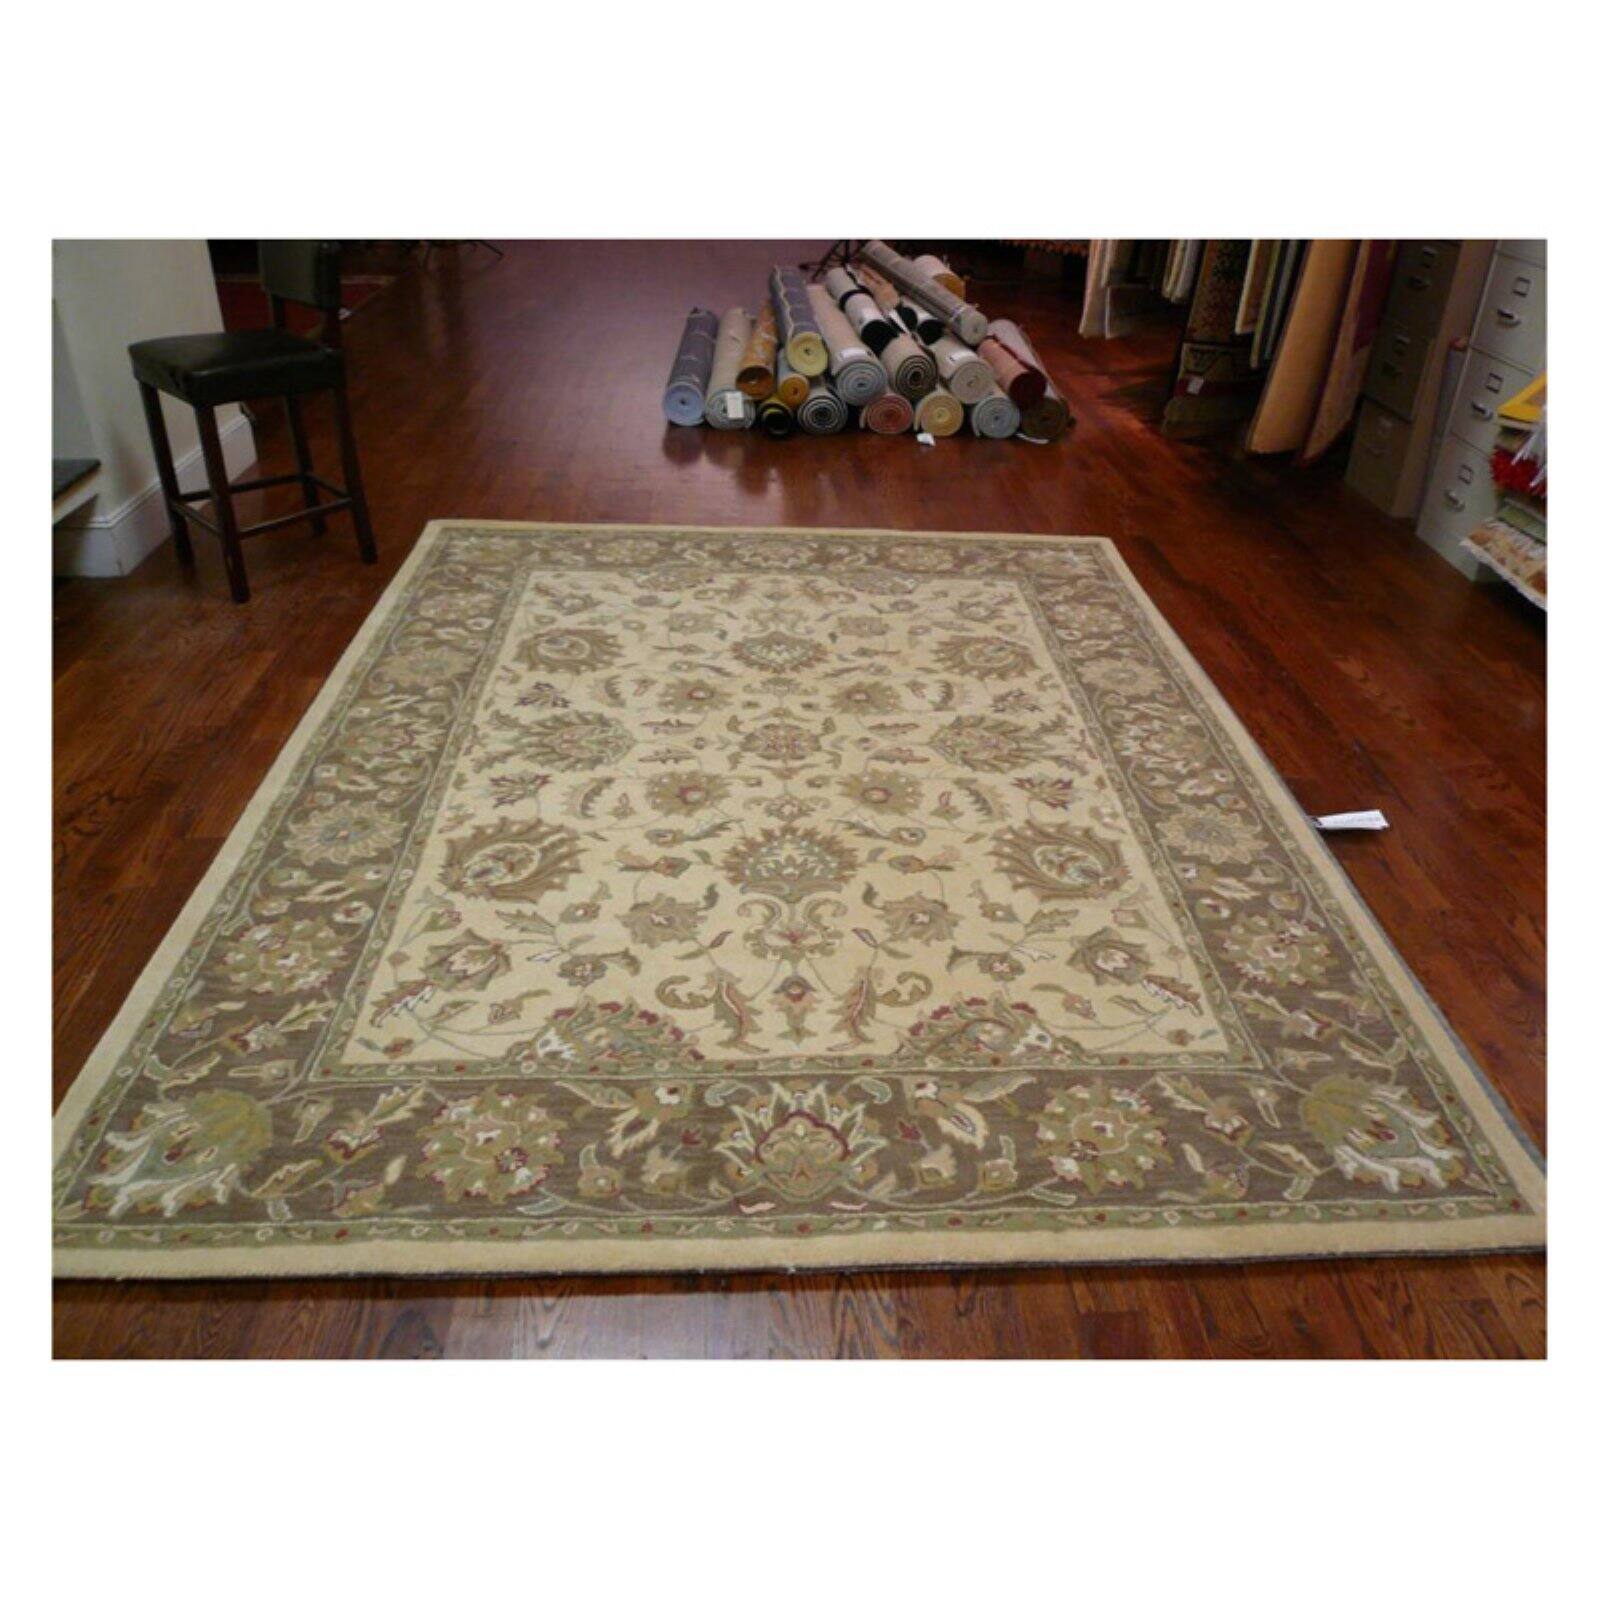 SAFAVIEH Heritage Regis Traditional Wool Area Rug, Ivory/Brown, 7'6" x 9'6" Oval - image 2 of 9